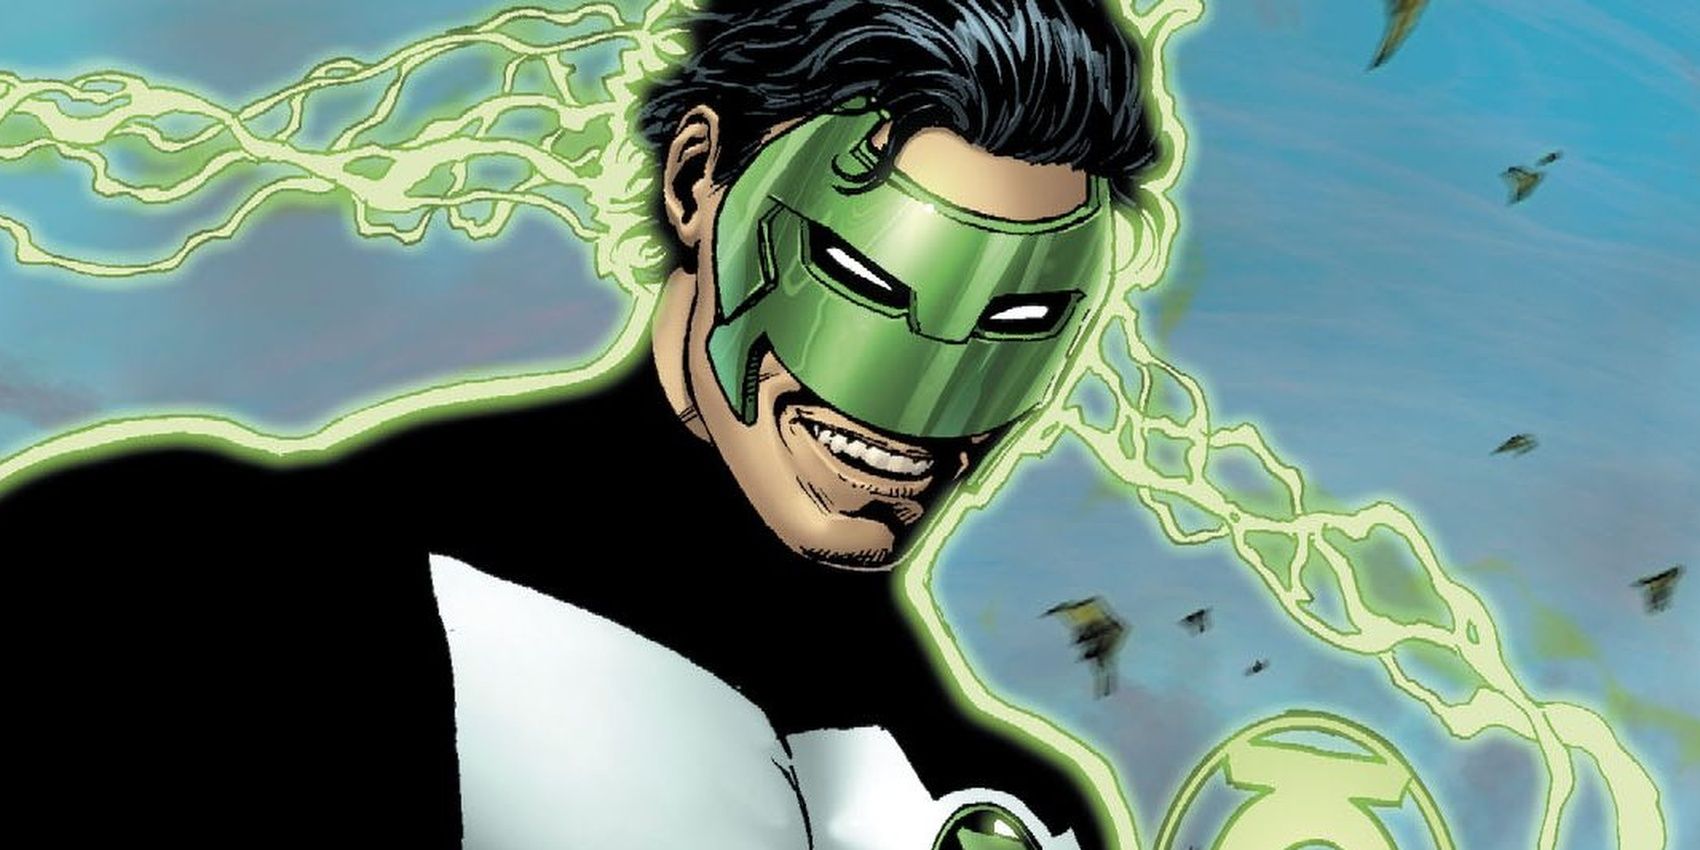 Kyle Rayner wears his Green Lantern uniform and smirks.